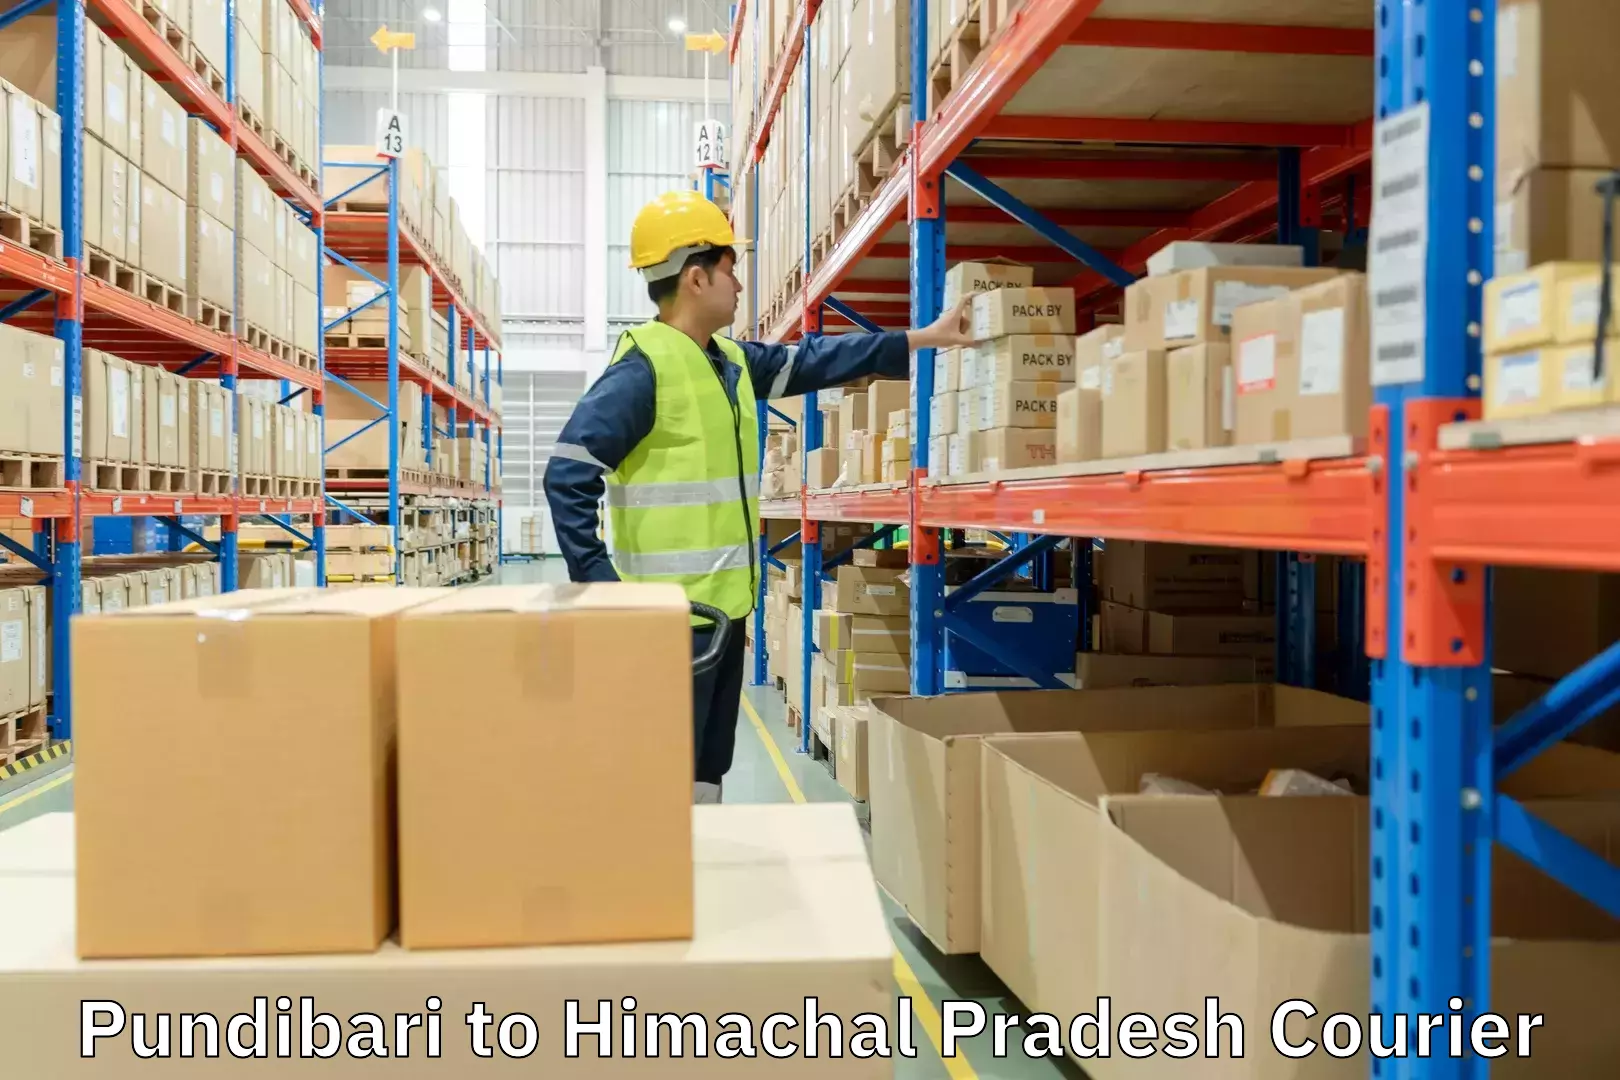 Courier service partnerships Pundibari to Himachal Pradesh